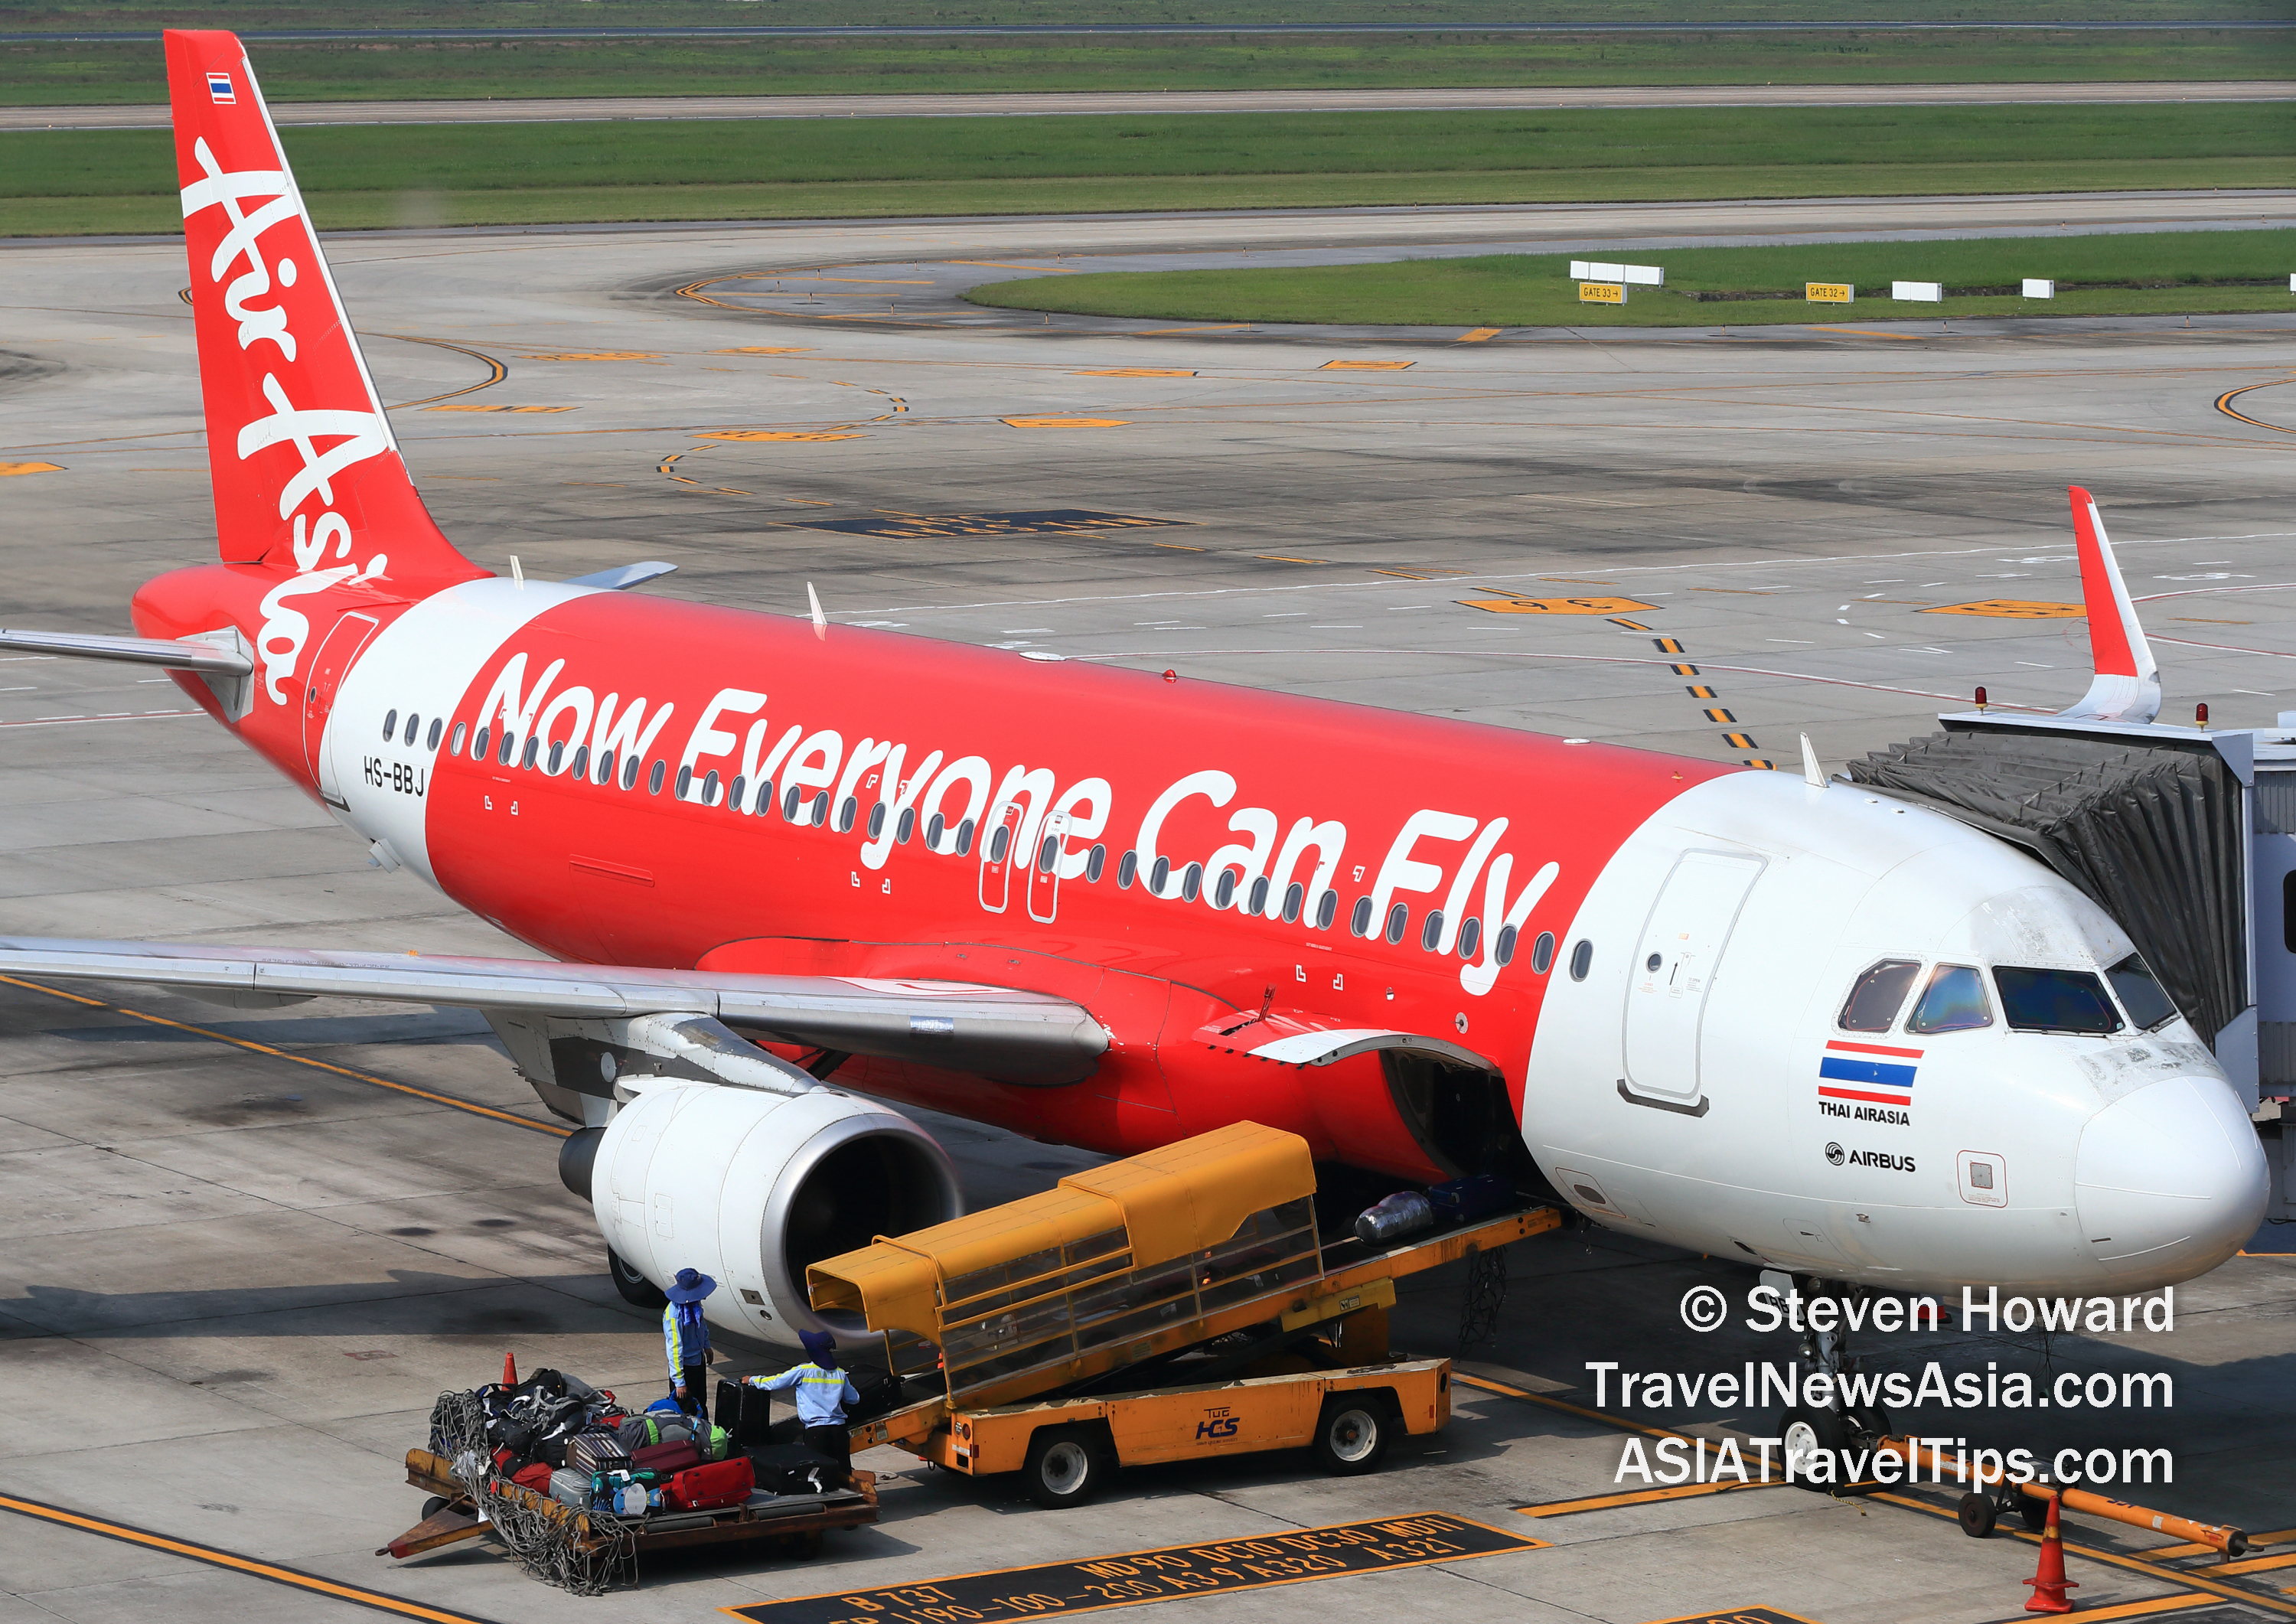 Flight singapore vtl airasia to AirAsia suspends